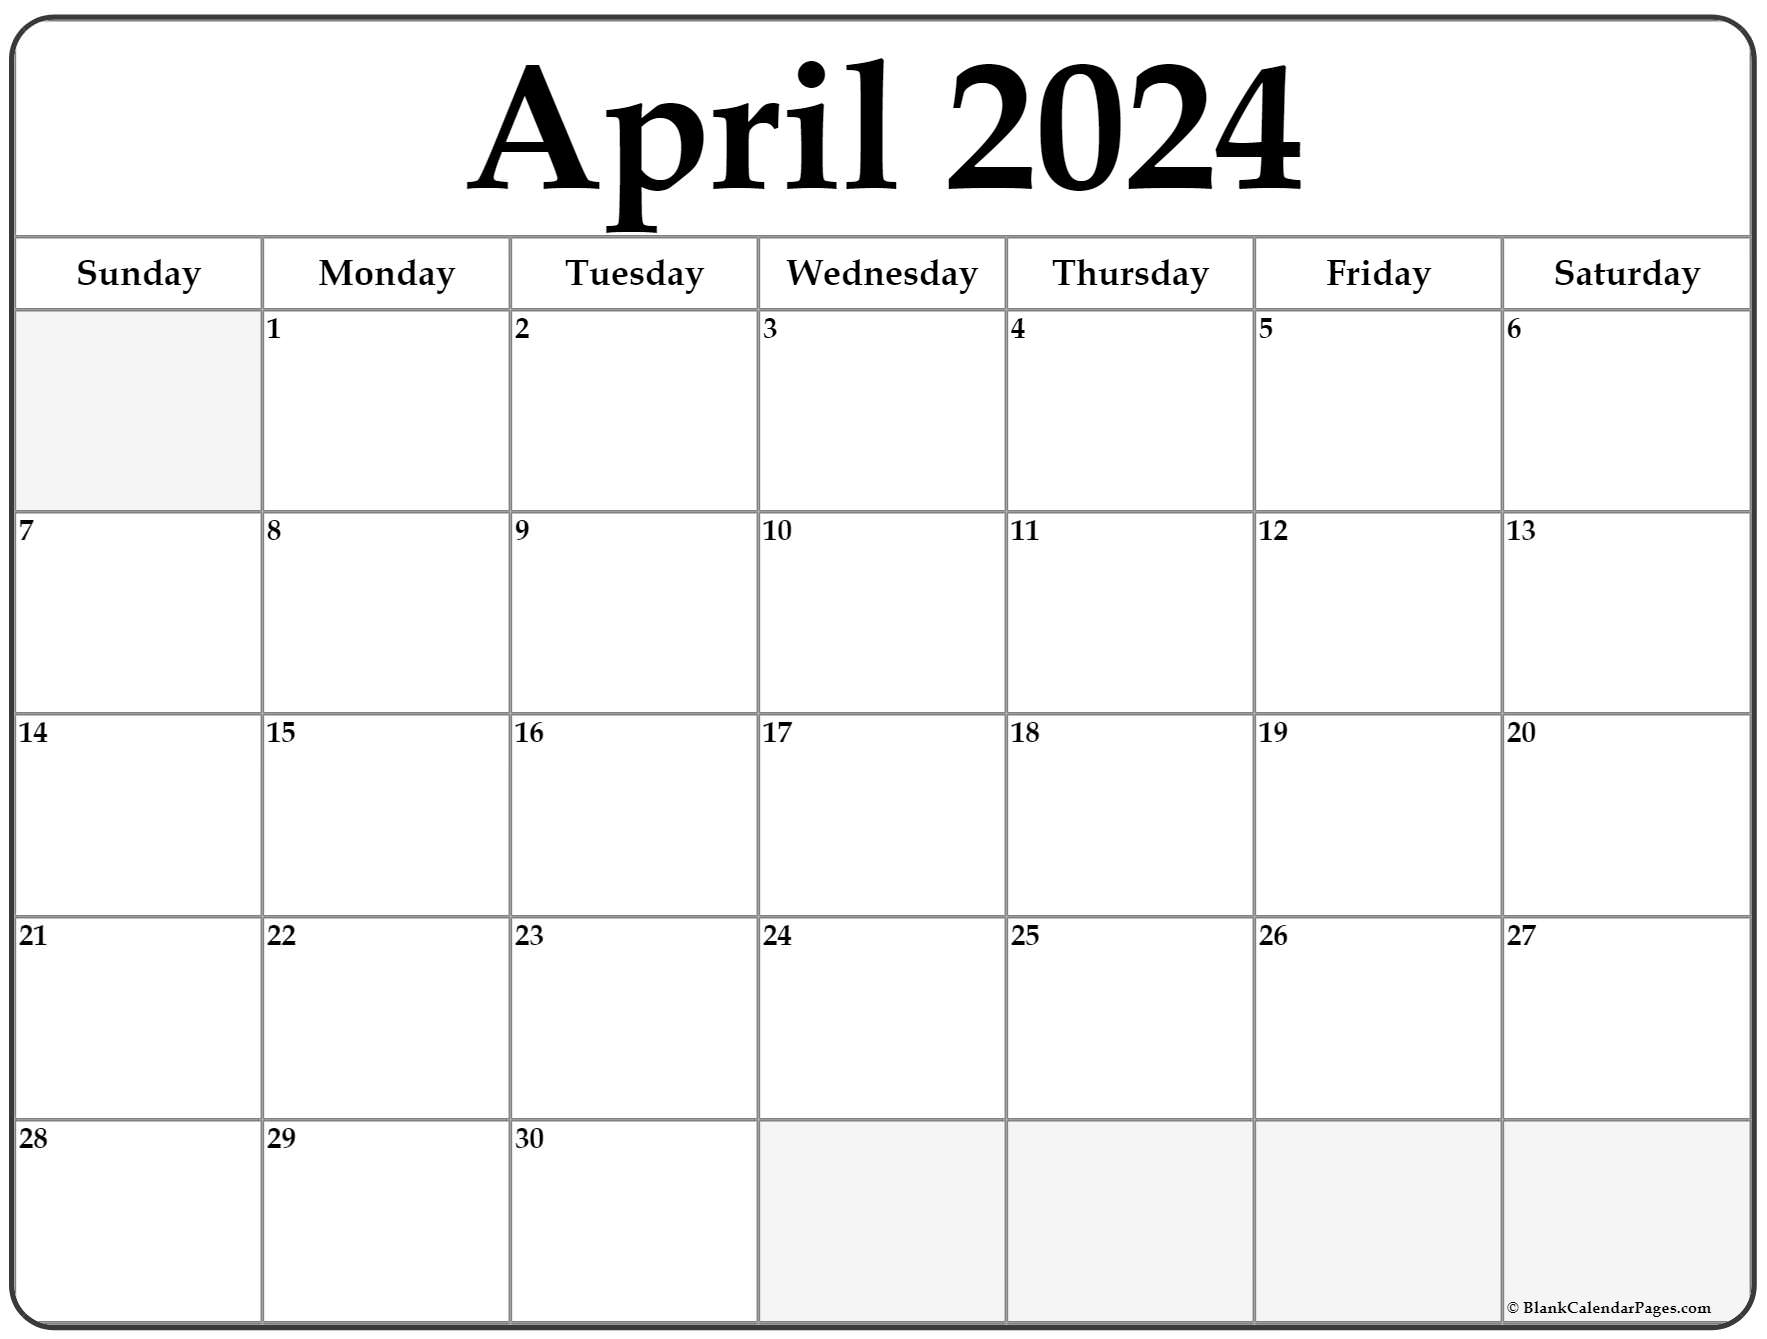 Free Printable Calendar April 2022 April 2022 Calendar | Free Printable Calendar Templates